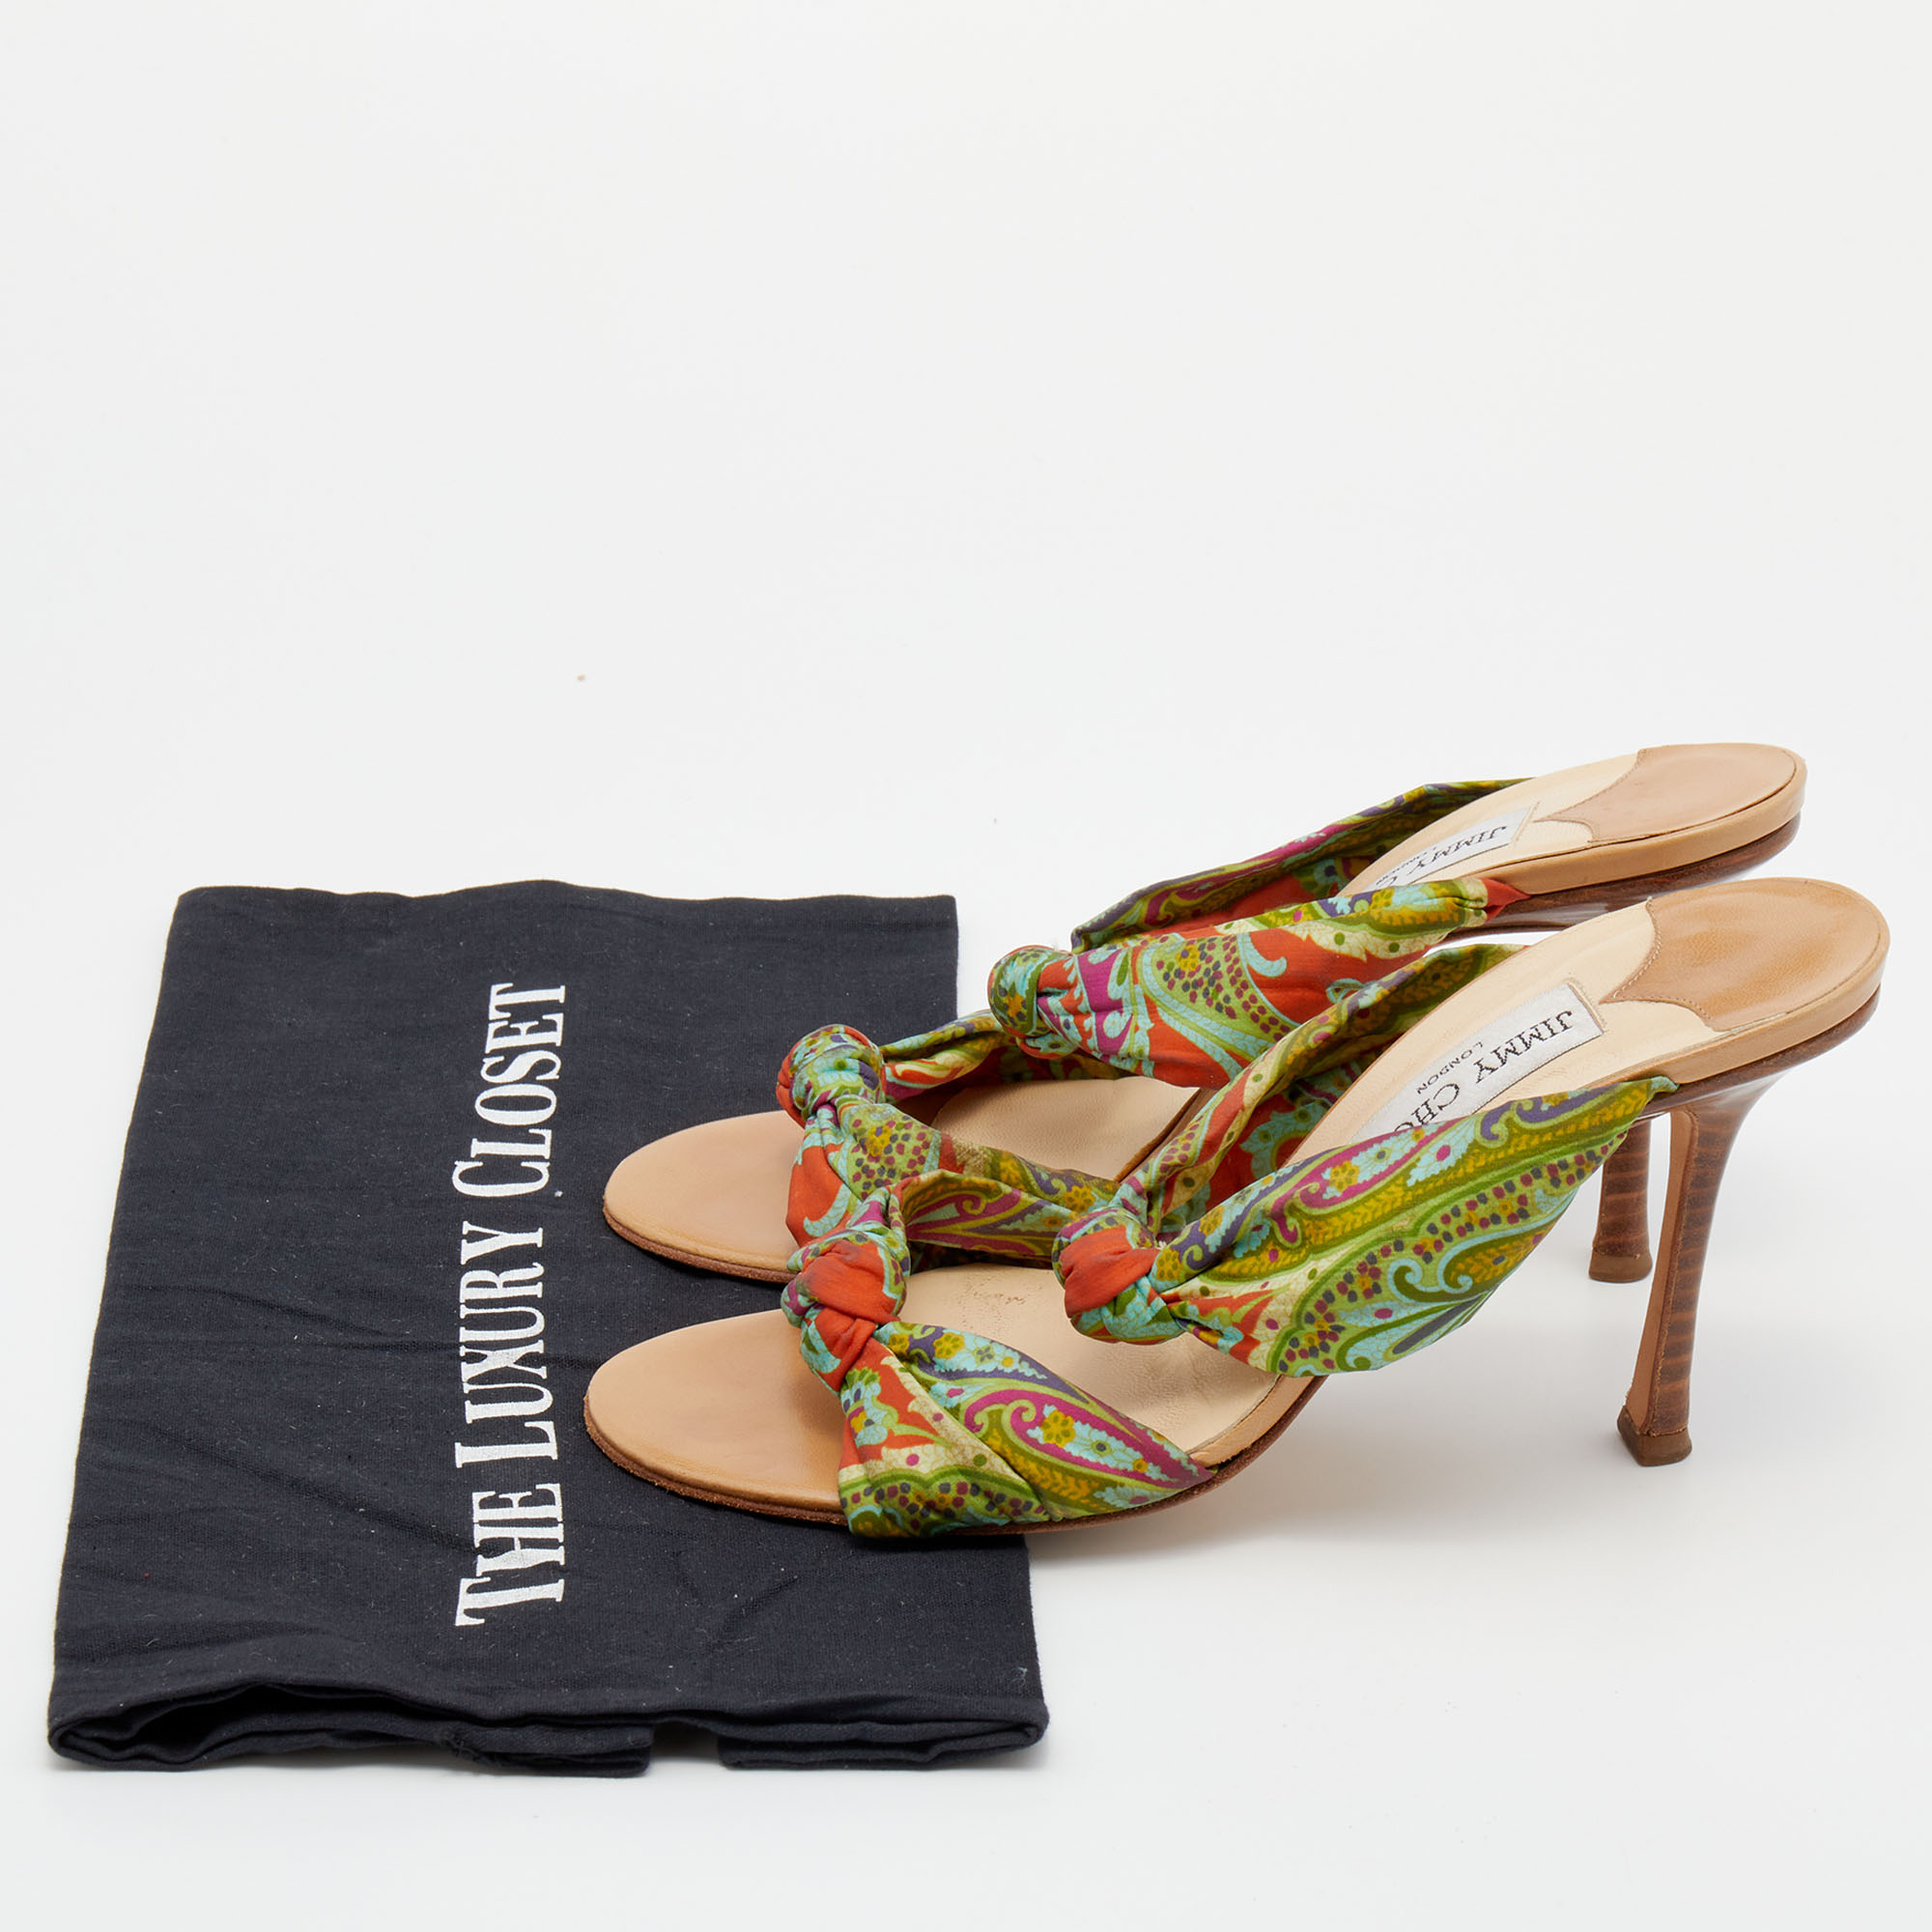 Jimmy Choo Multicolor Floral Print Satin Kris Knot Slide Sandals Size 39.5